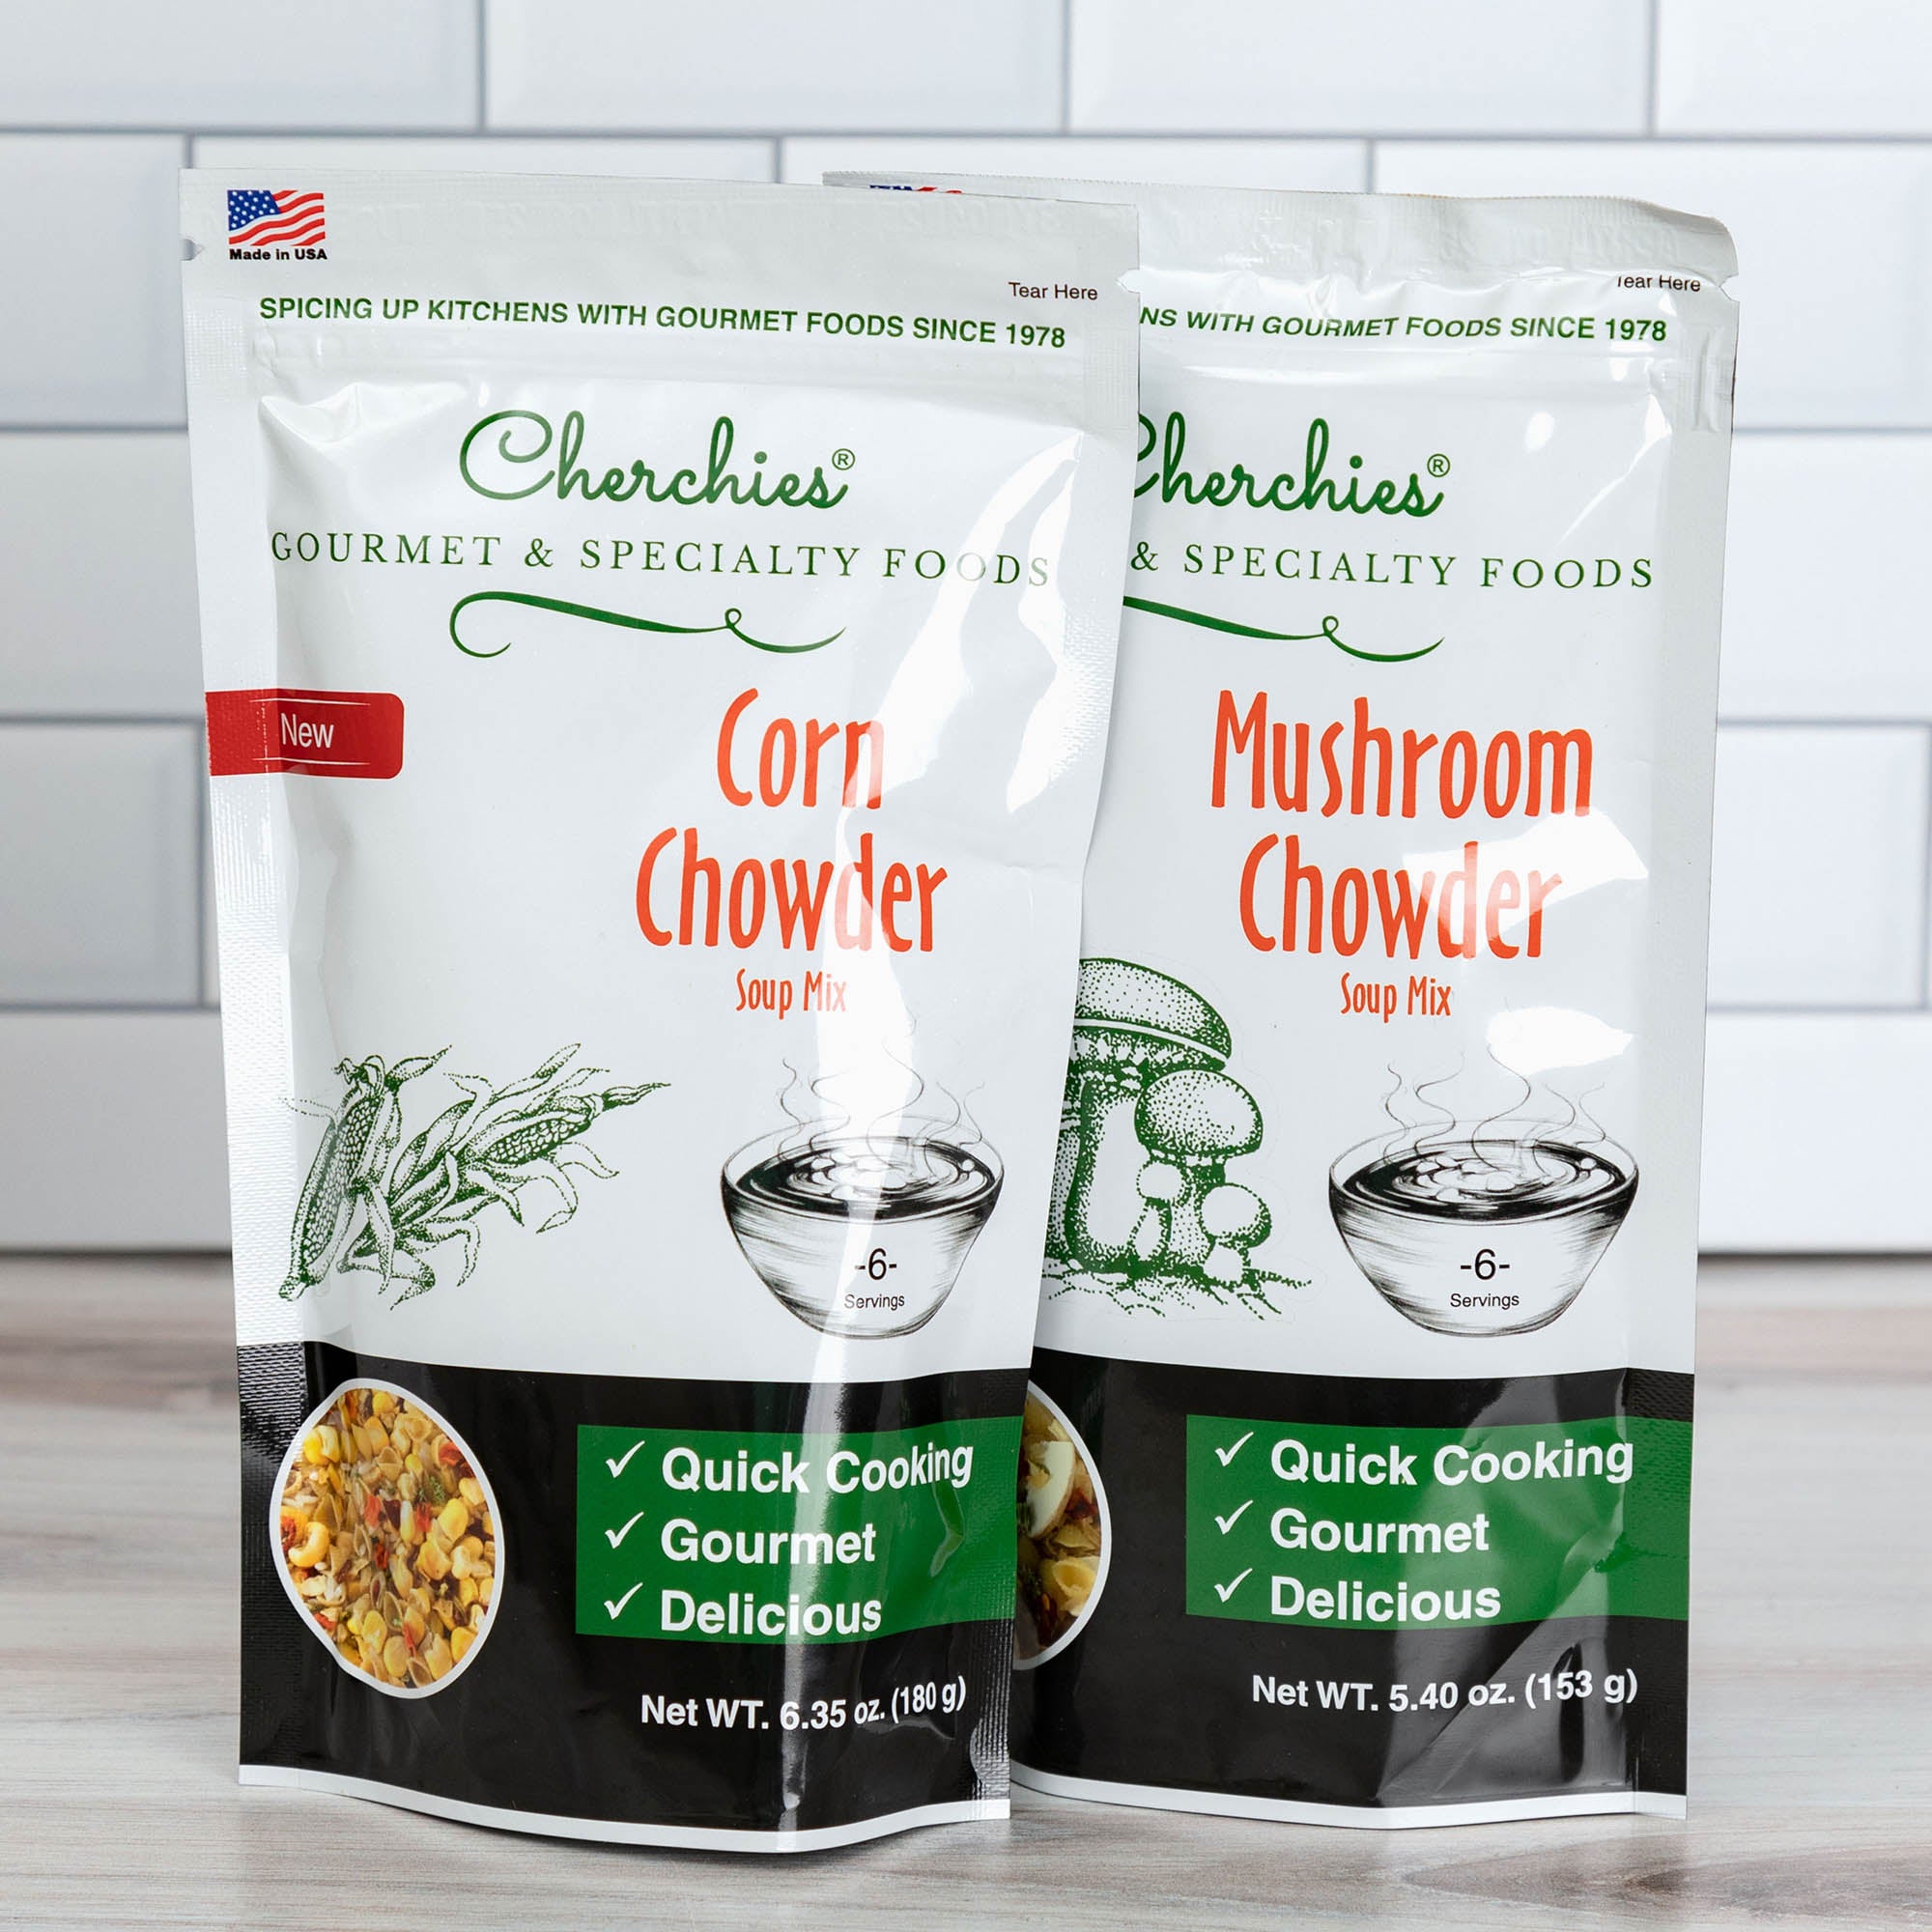 Cherchies® Quick Cooking Chowder Soup Mix - Mushroom